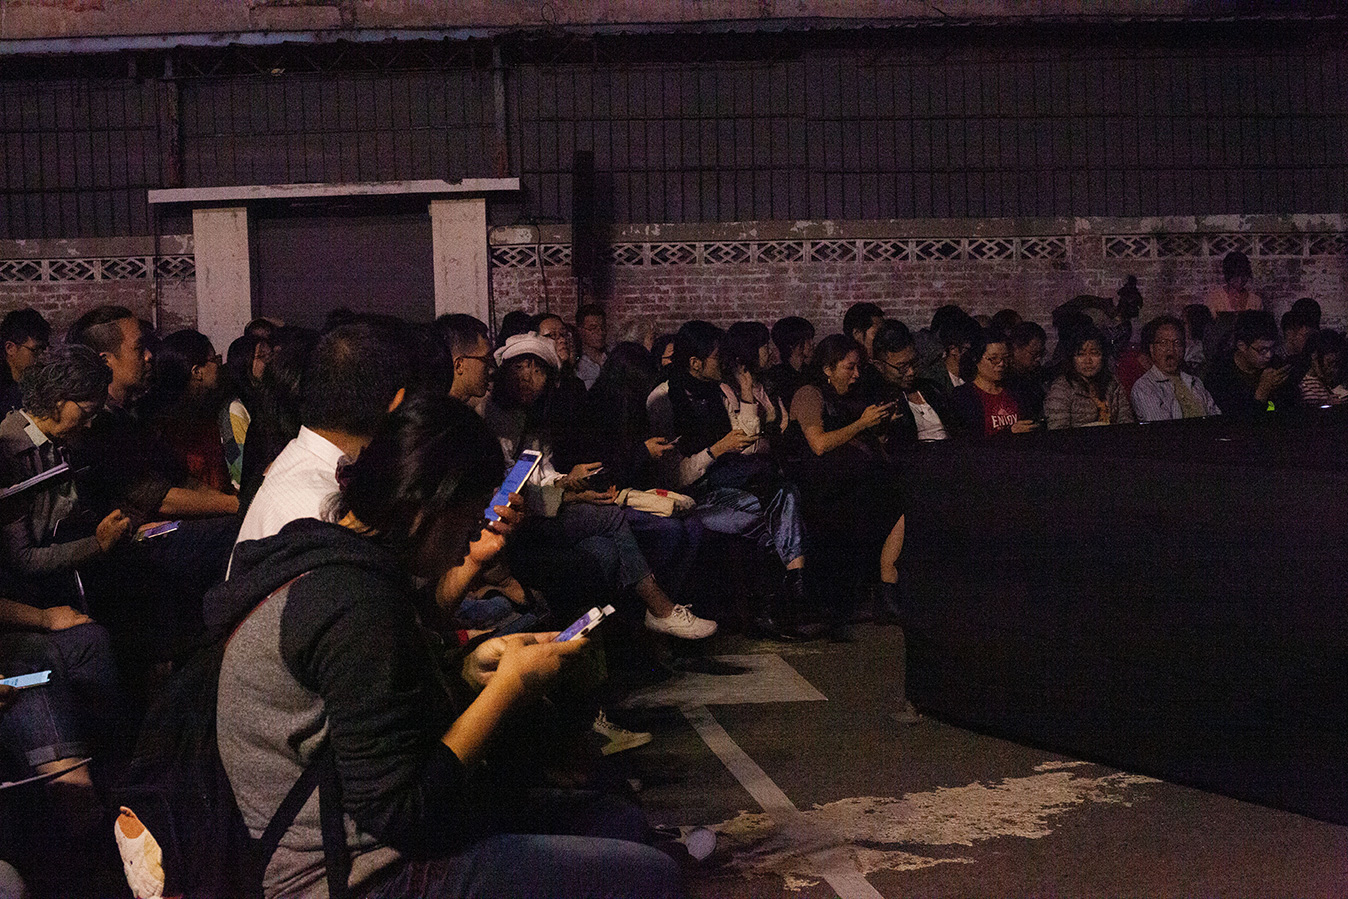 Audience members participate via their smart phones.